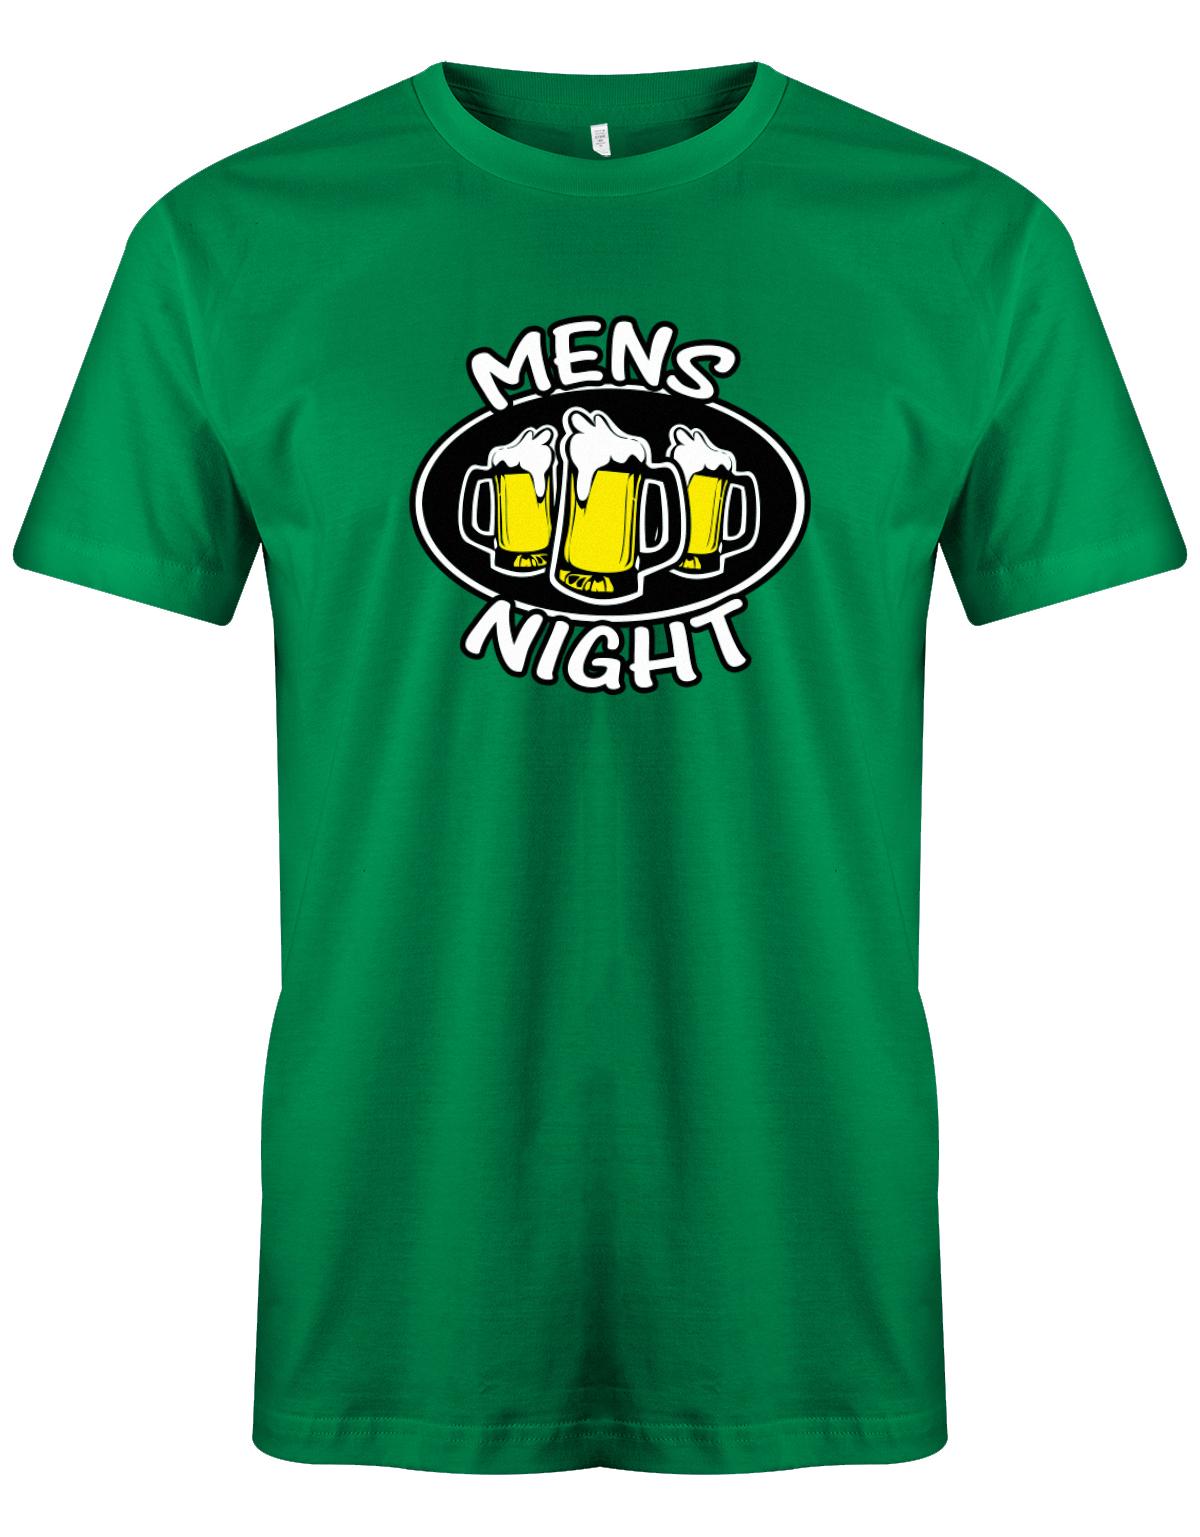 Mens-Night-Bier-Herren-Shirt-Gr-n